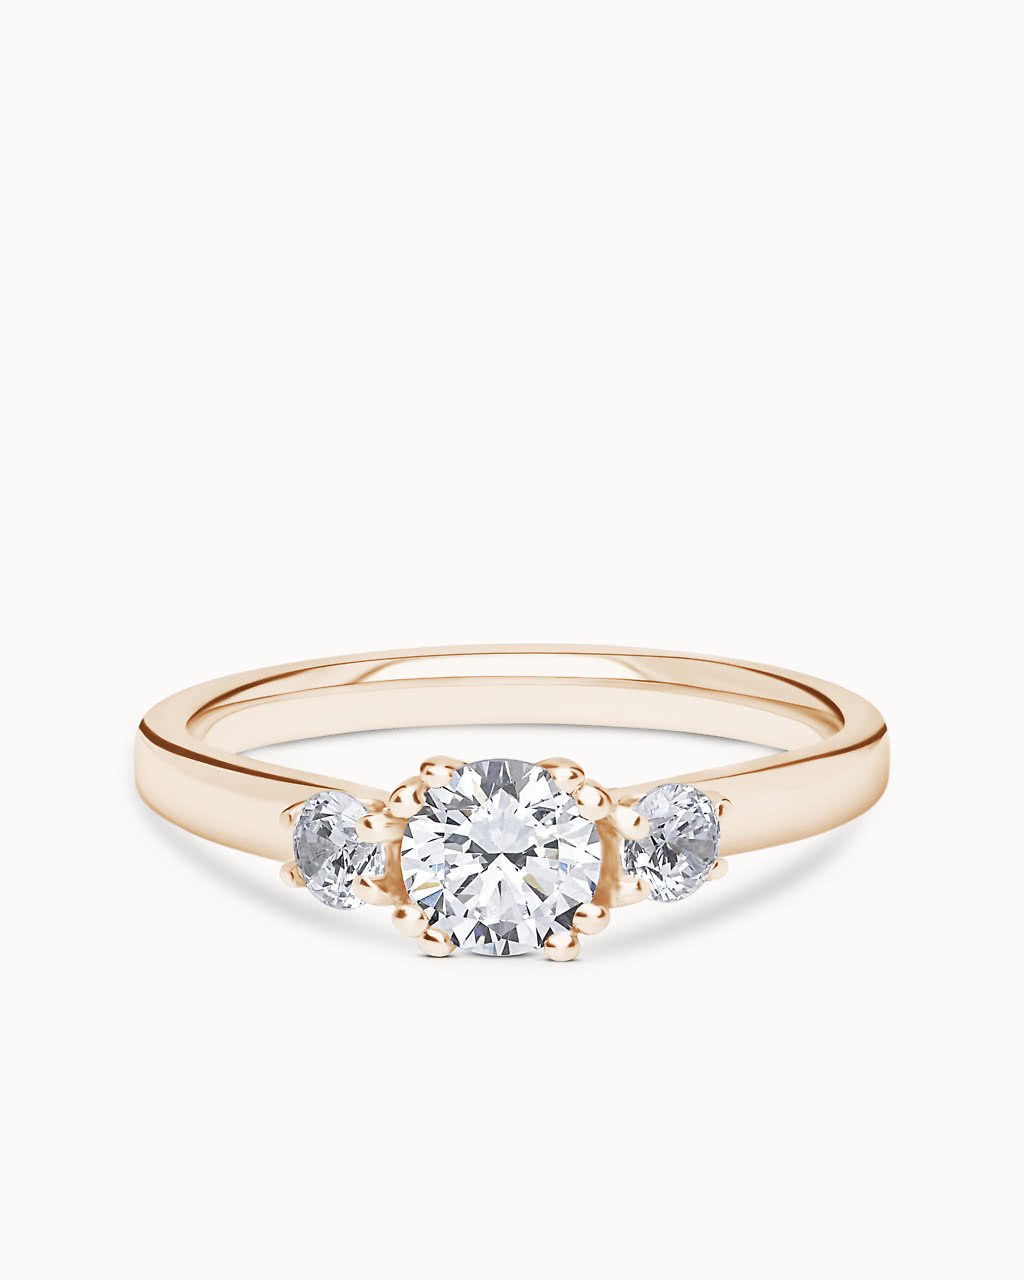 Diamond Engagement Rings Glasgow | Bespoke Rings And Jewellery